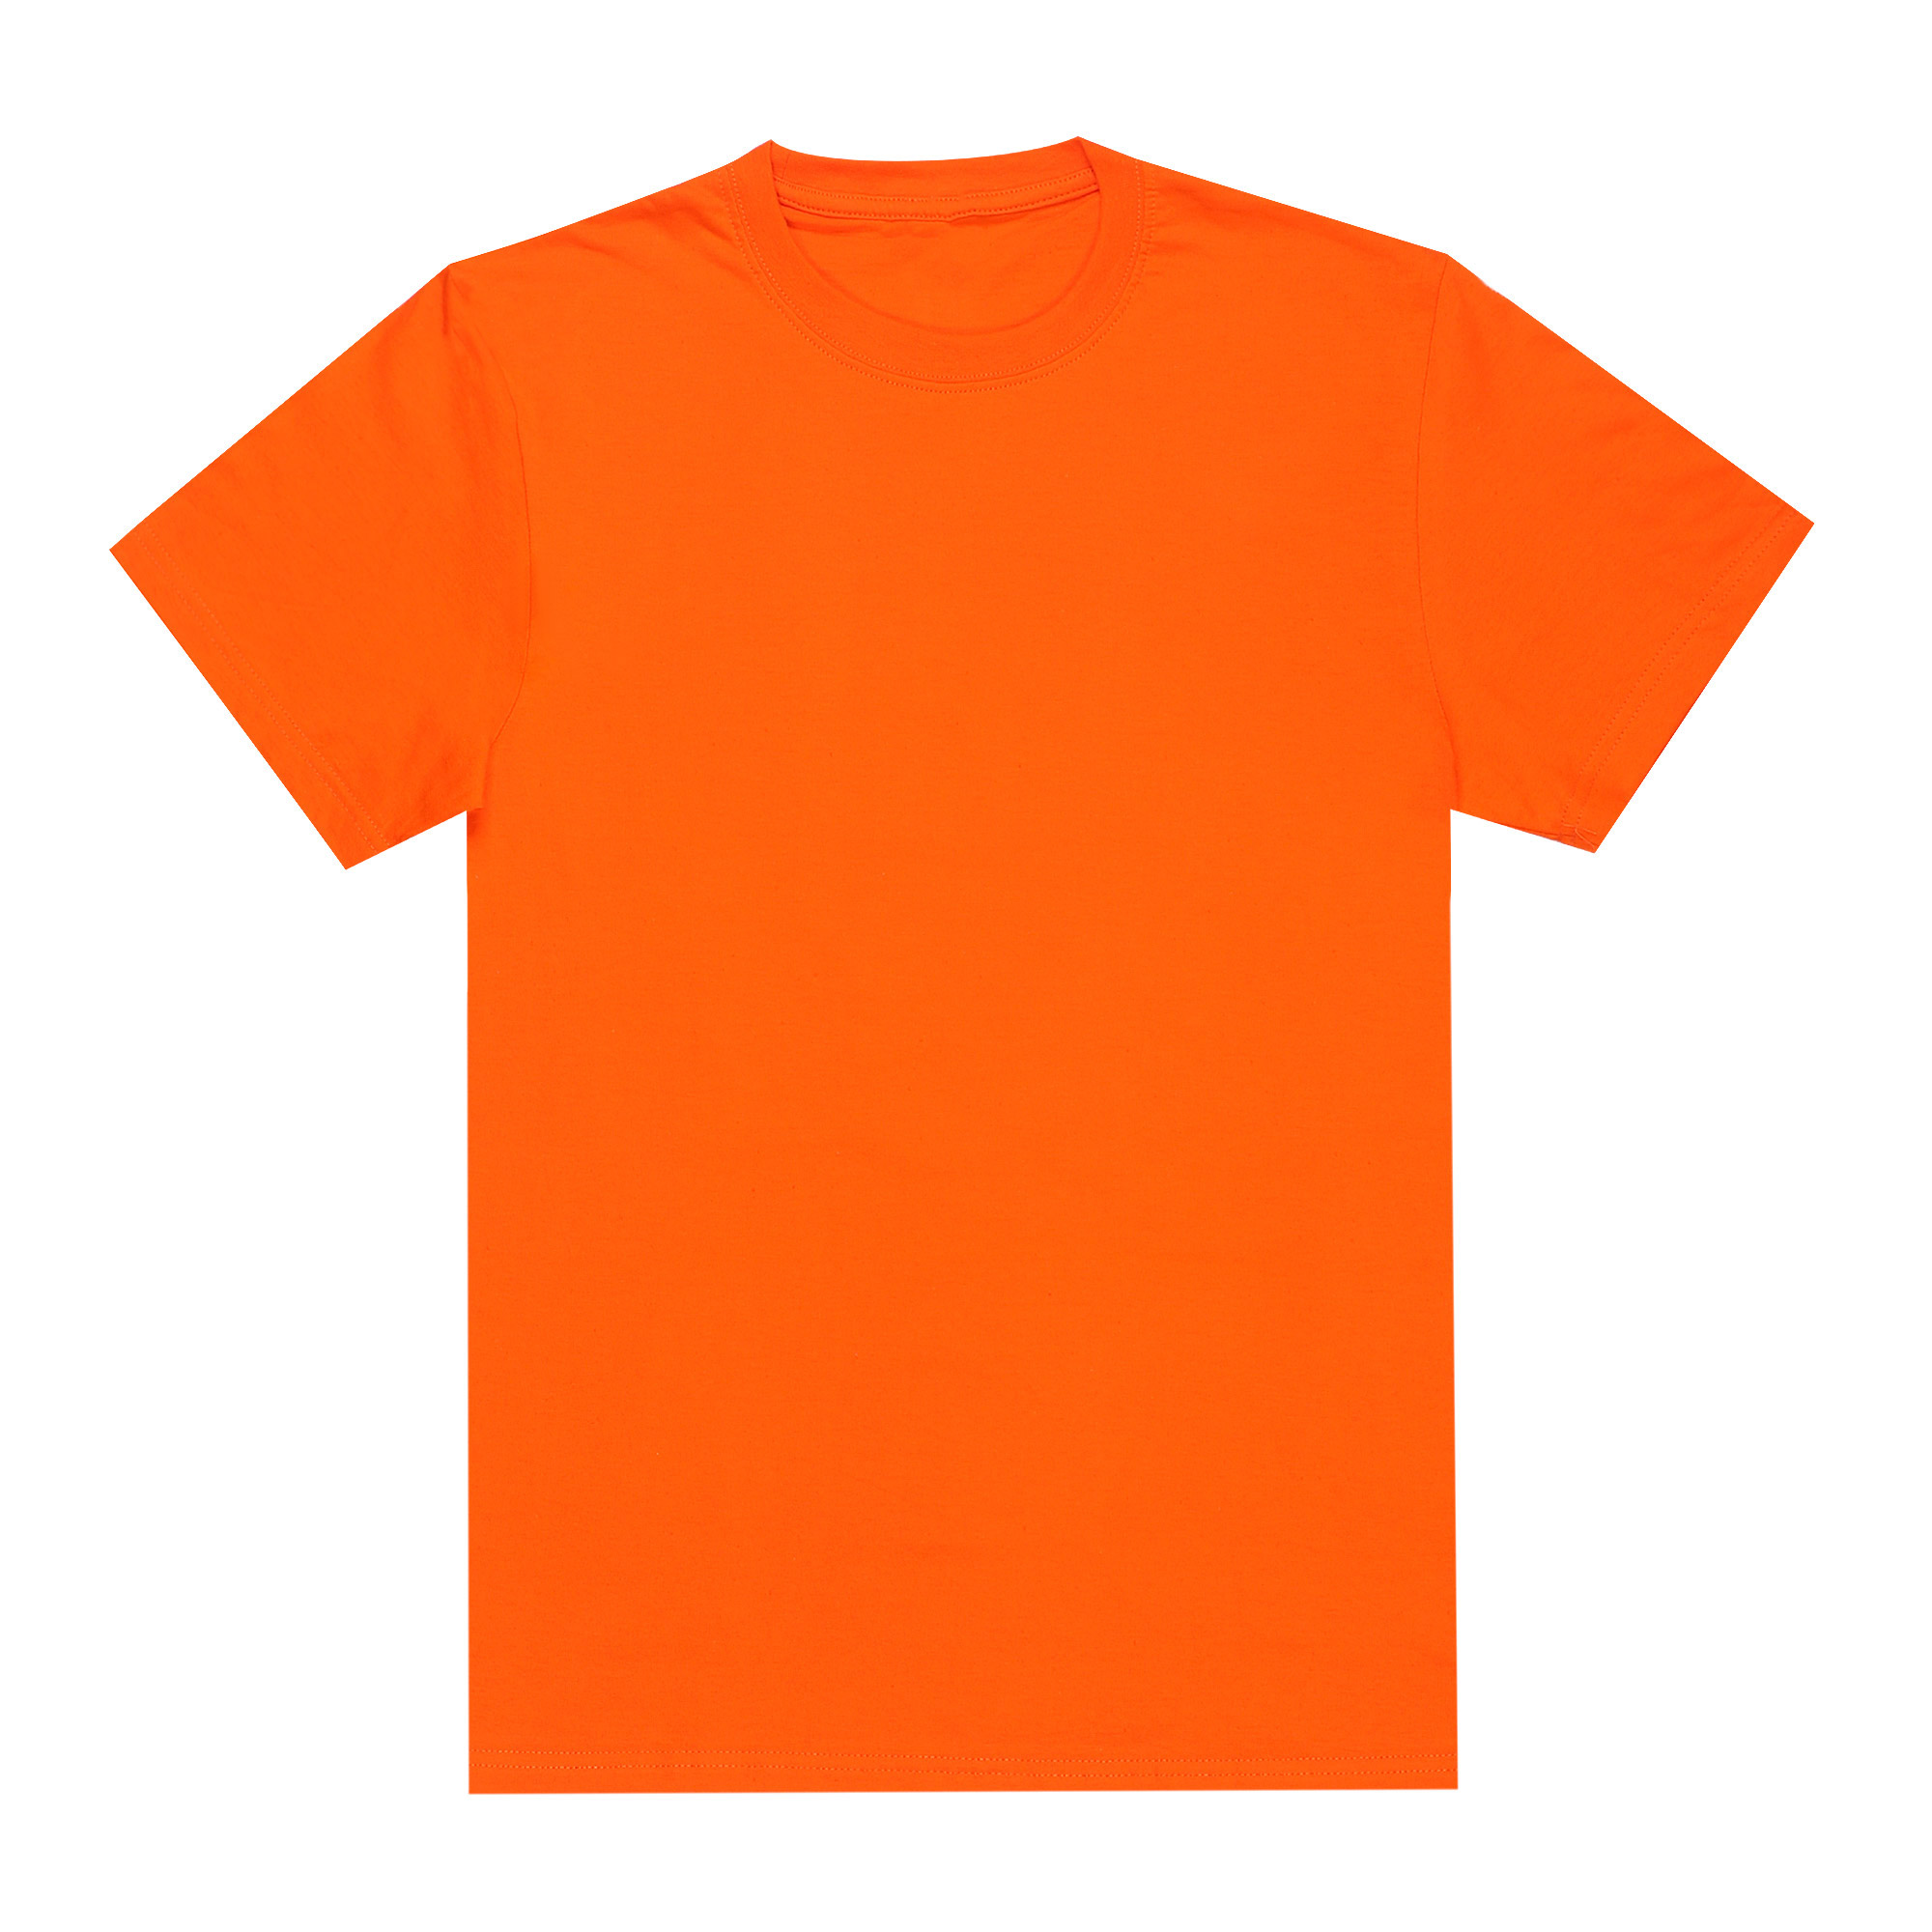 Футболка мужская M-1 Promo оранжевая с коротким рукавом M, цвет оранжевый, размер M - фото 1